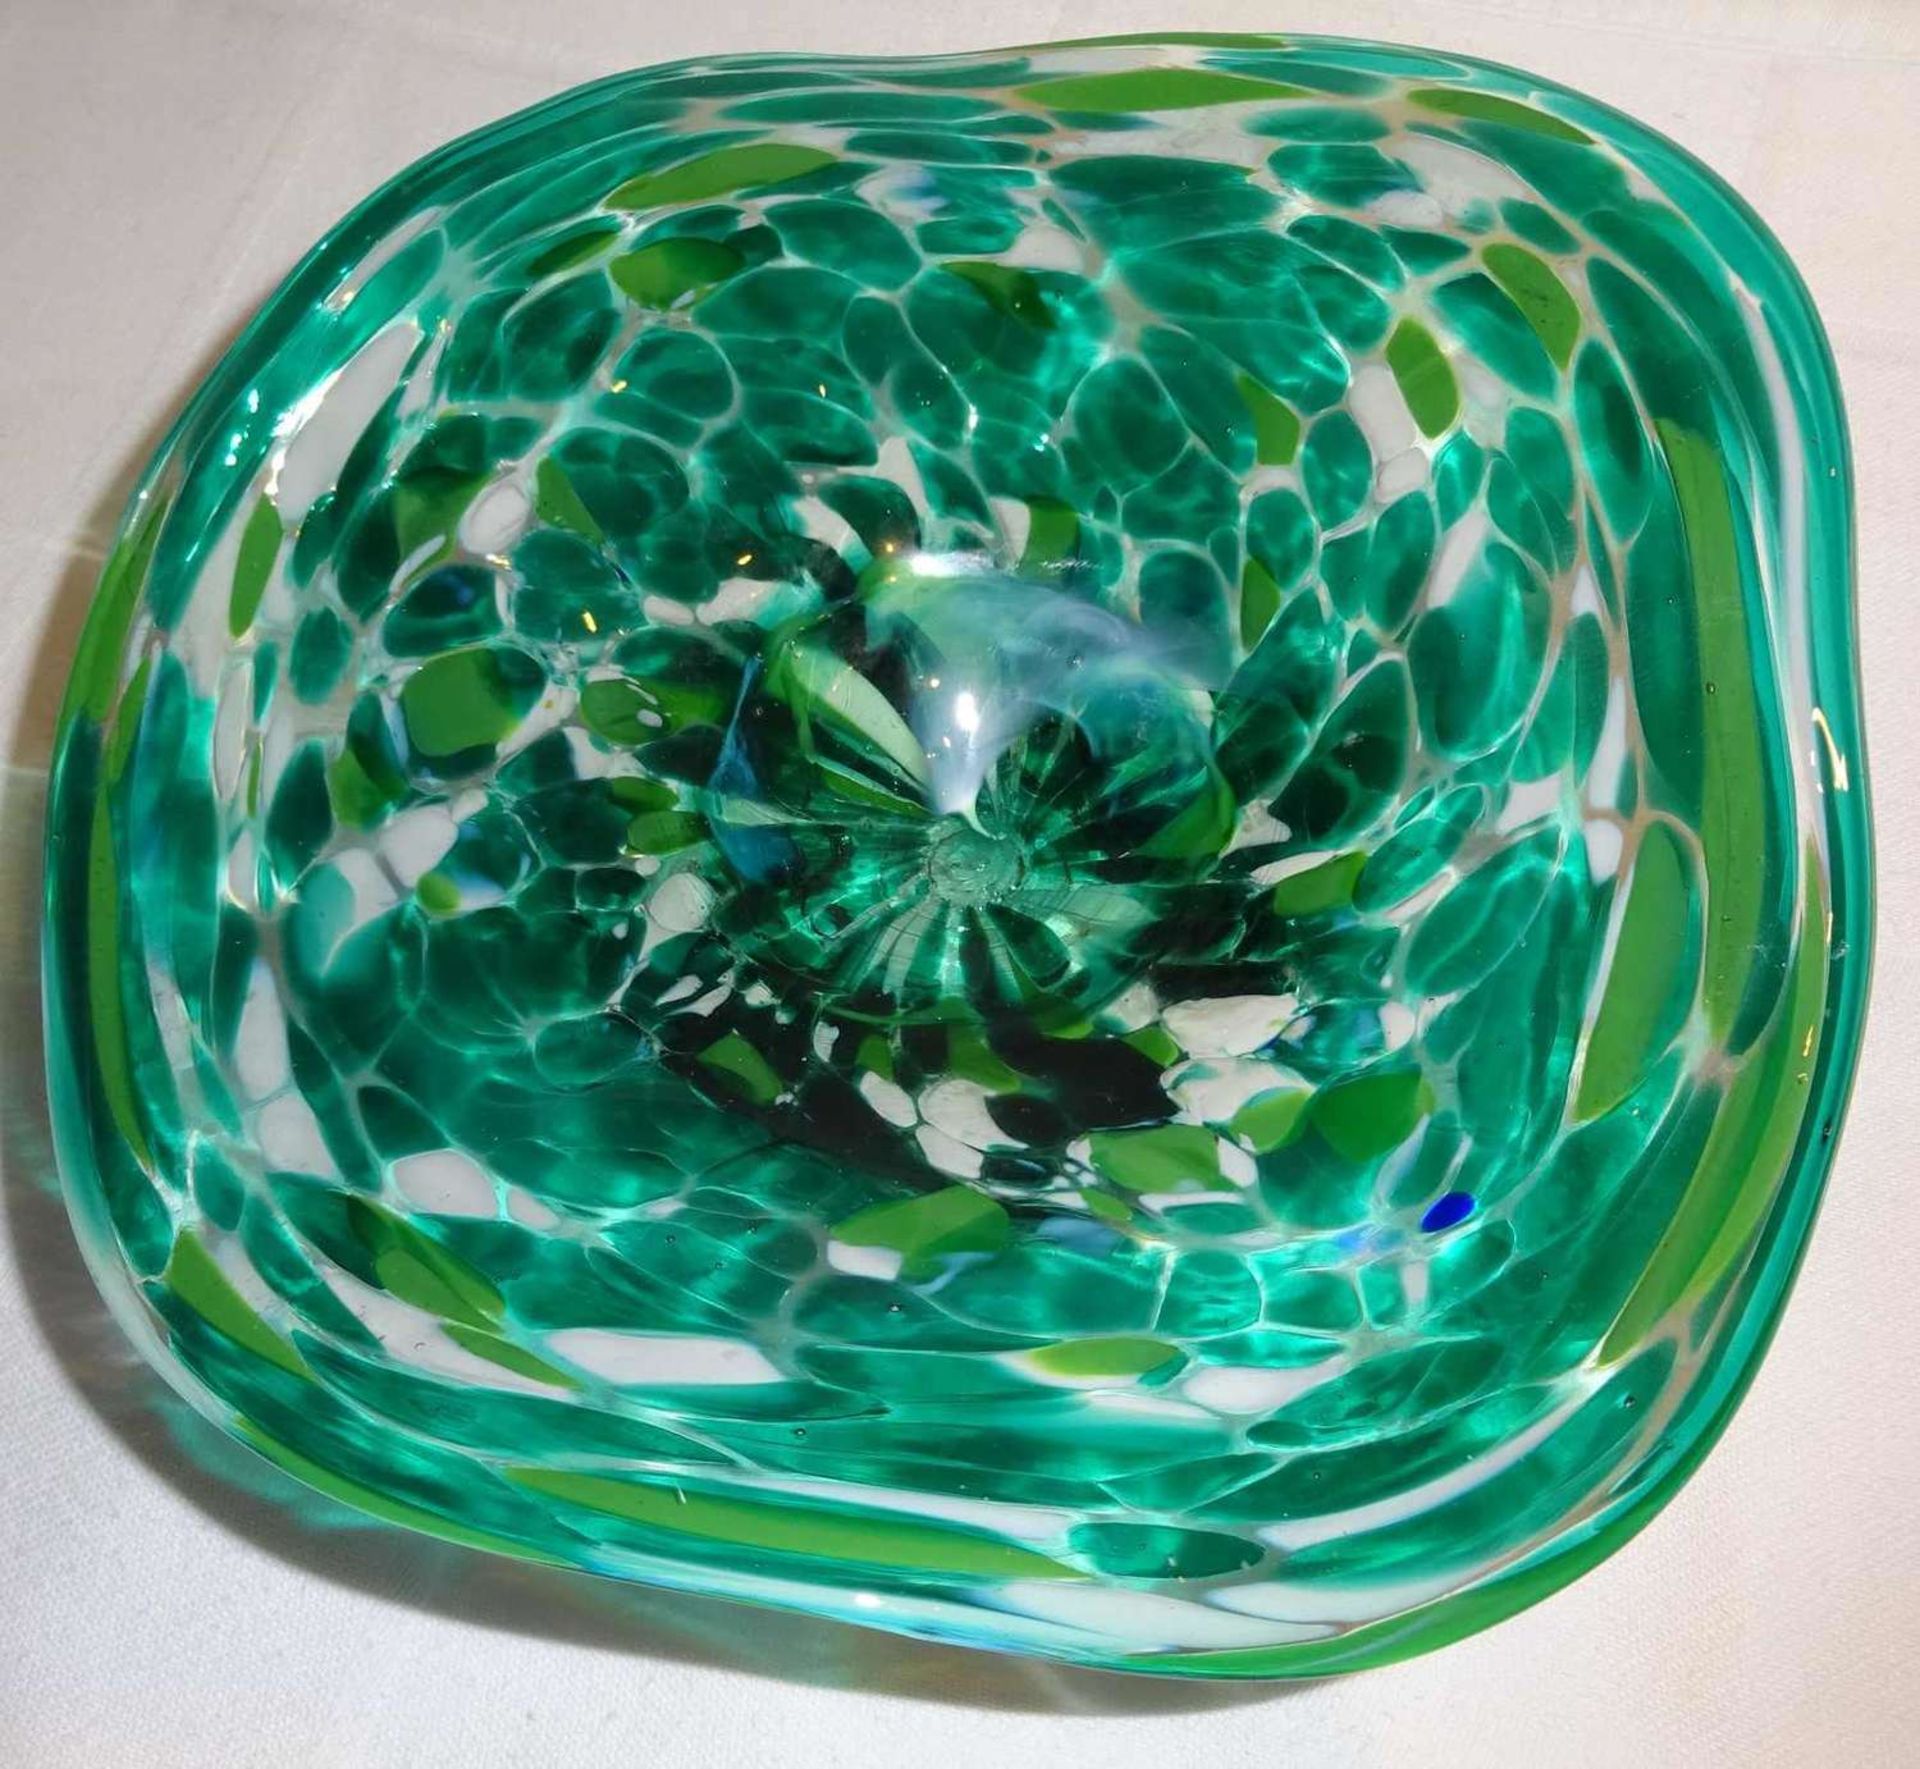 2 Glasschalen Murano / bayr. Wald. Guter Zustand2 glass bowls Murano / Bavarian. Forest. Good condi - Bild 3 aus 3